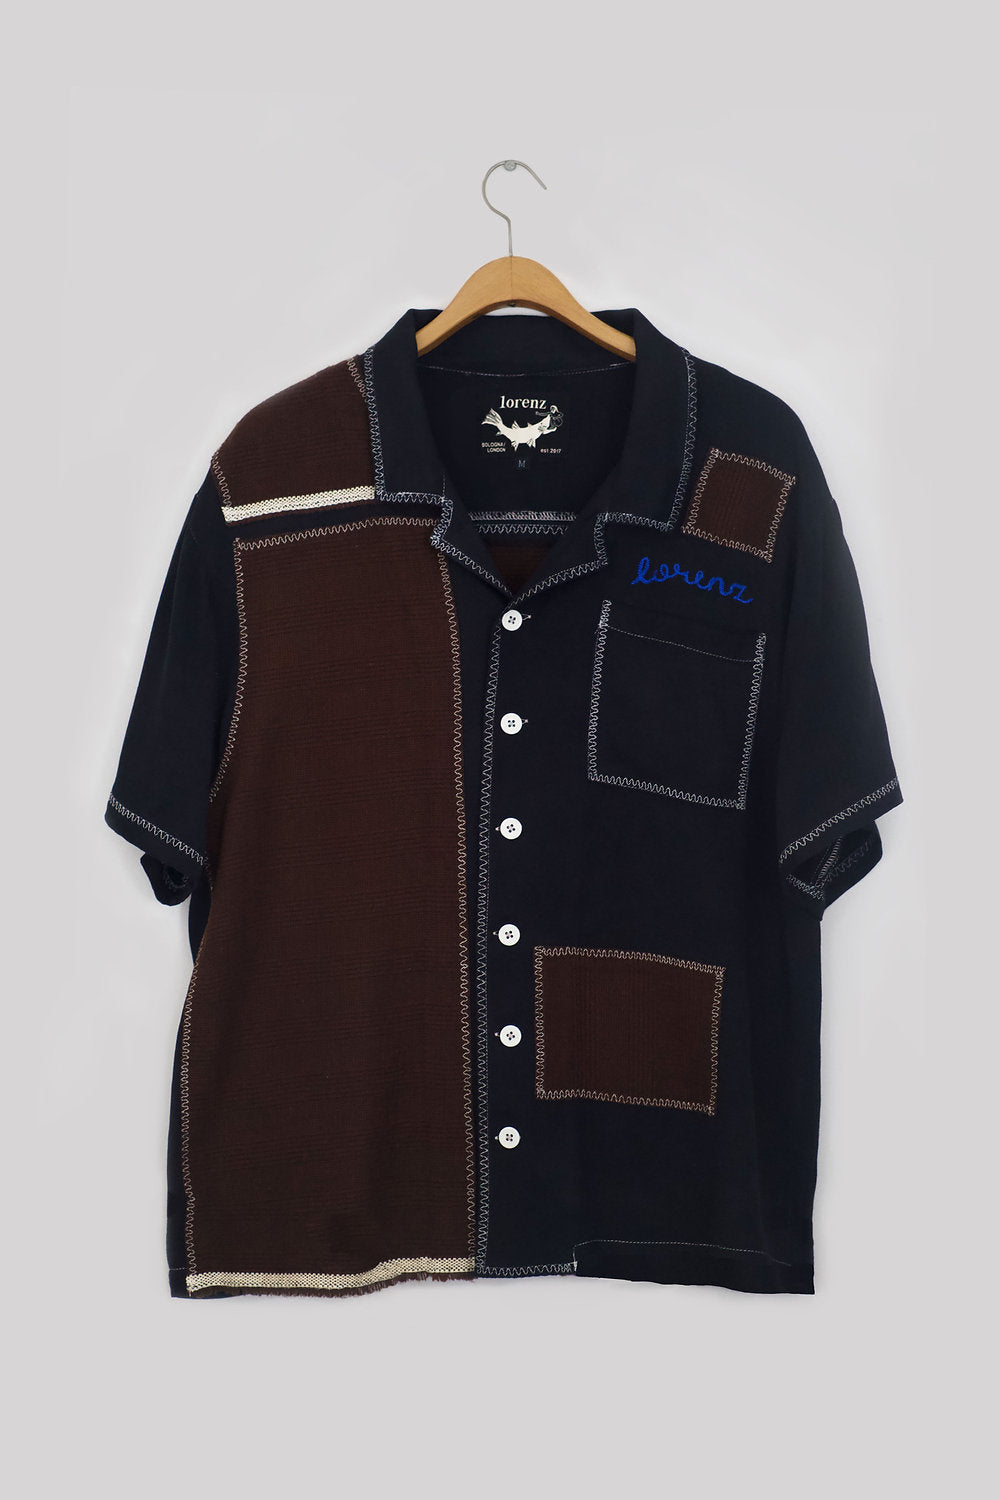 Shirt 6 - lorenz Menswear